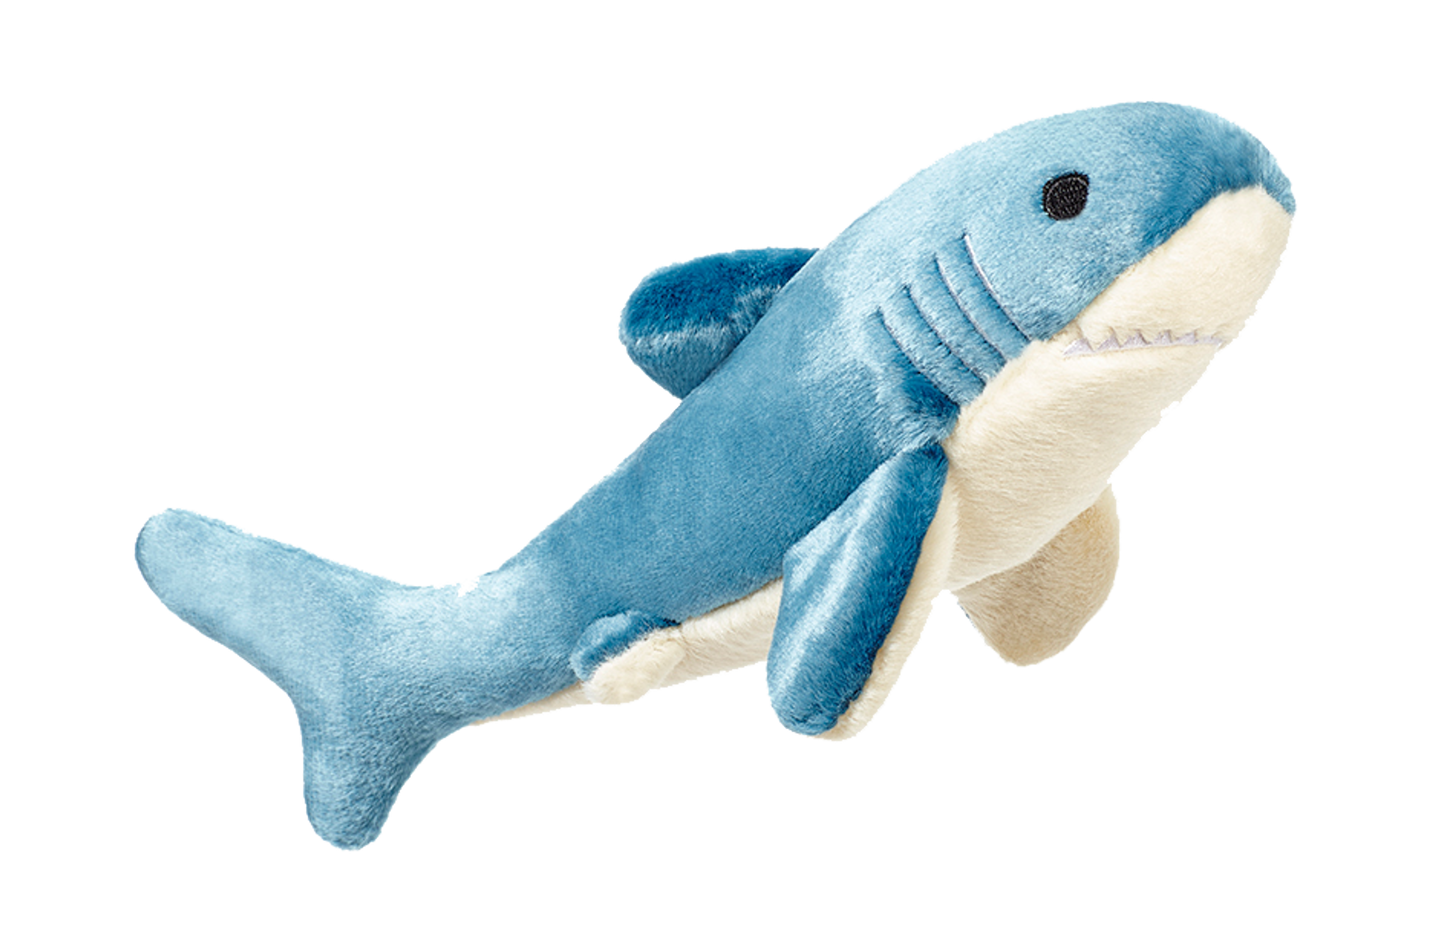 Fluff & Tuff Tank Shark - Small Plush Dog Toy